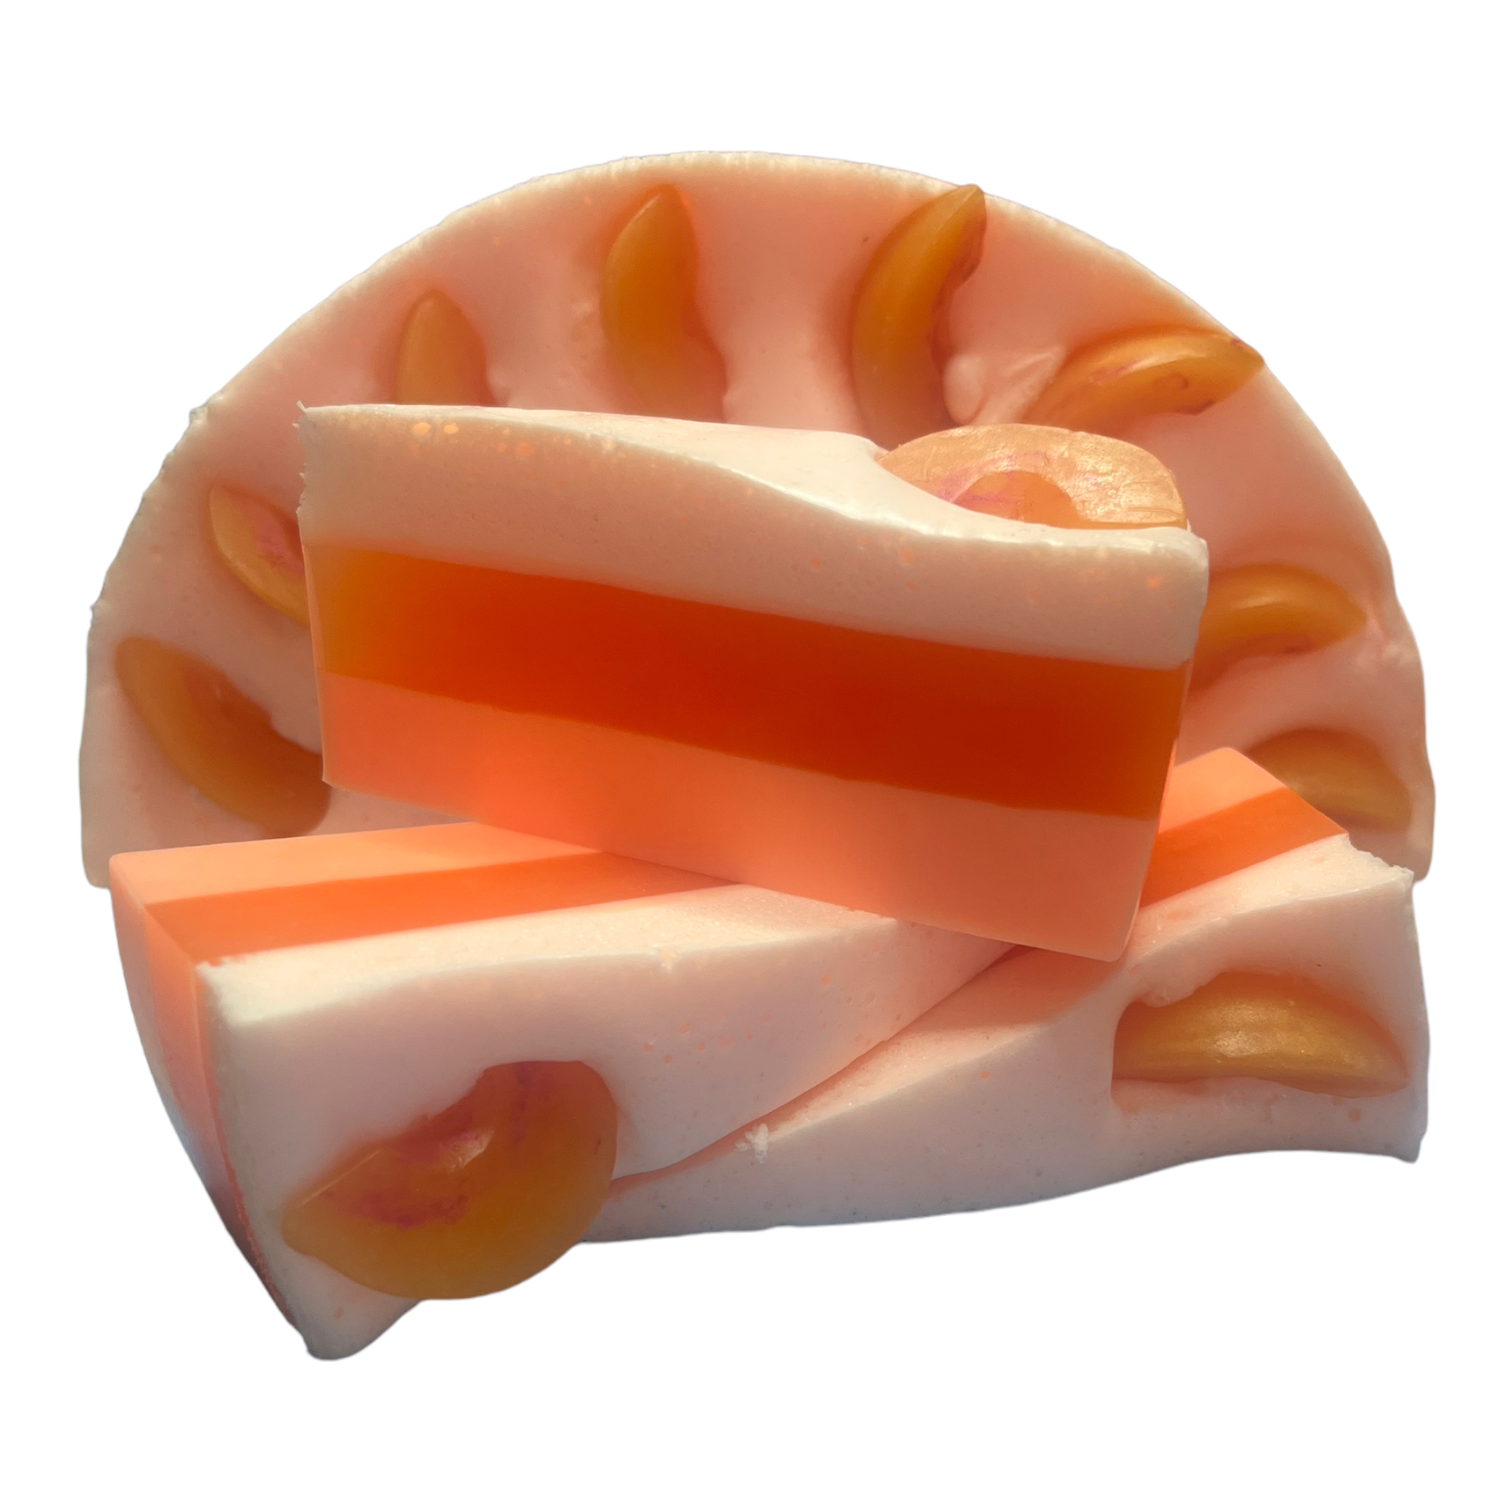 Peach Bellini soap cake